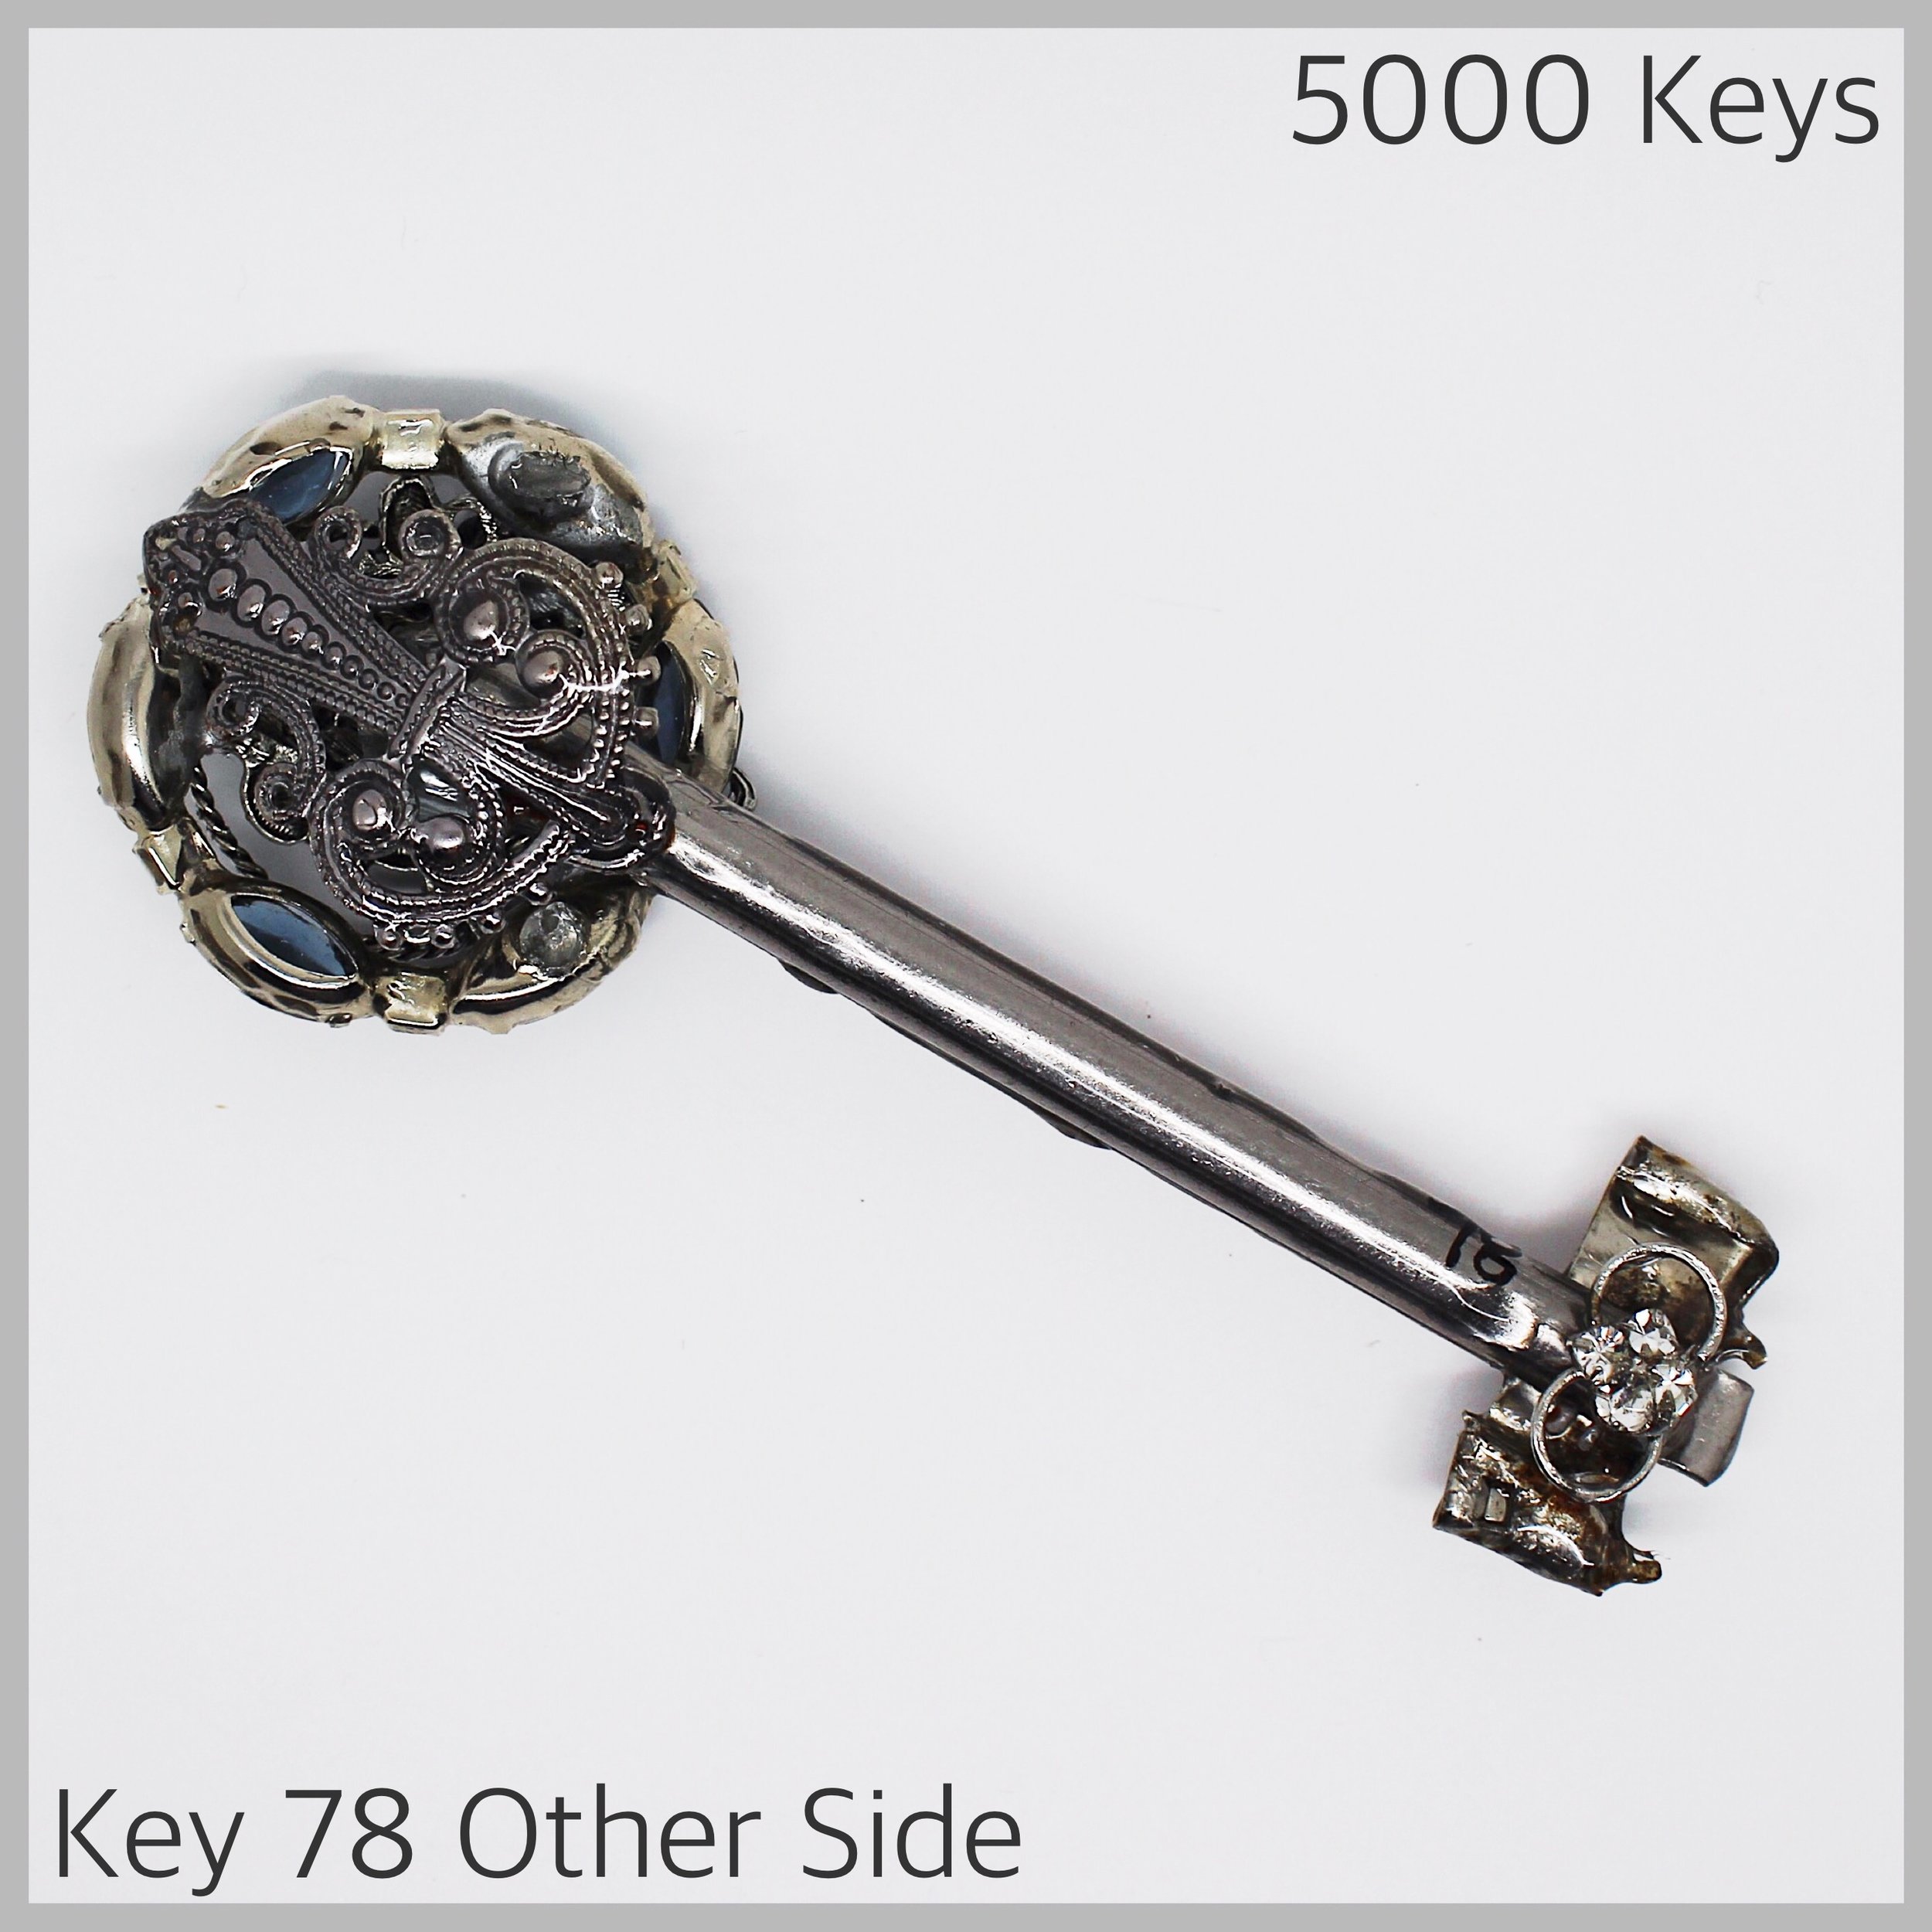 Key 78 other side - 1.JPG